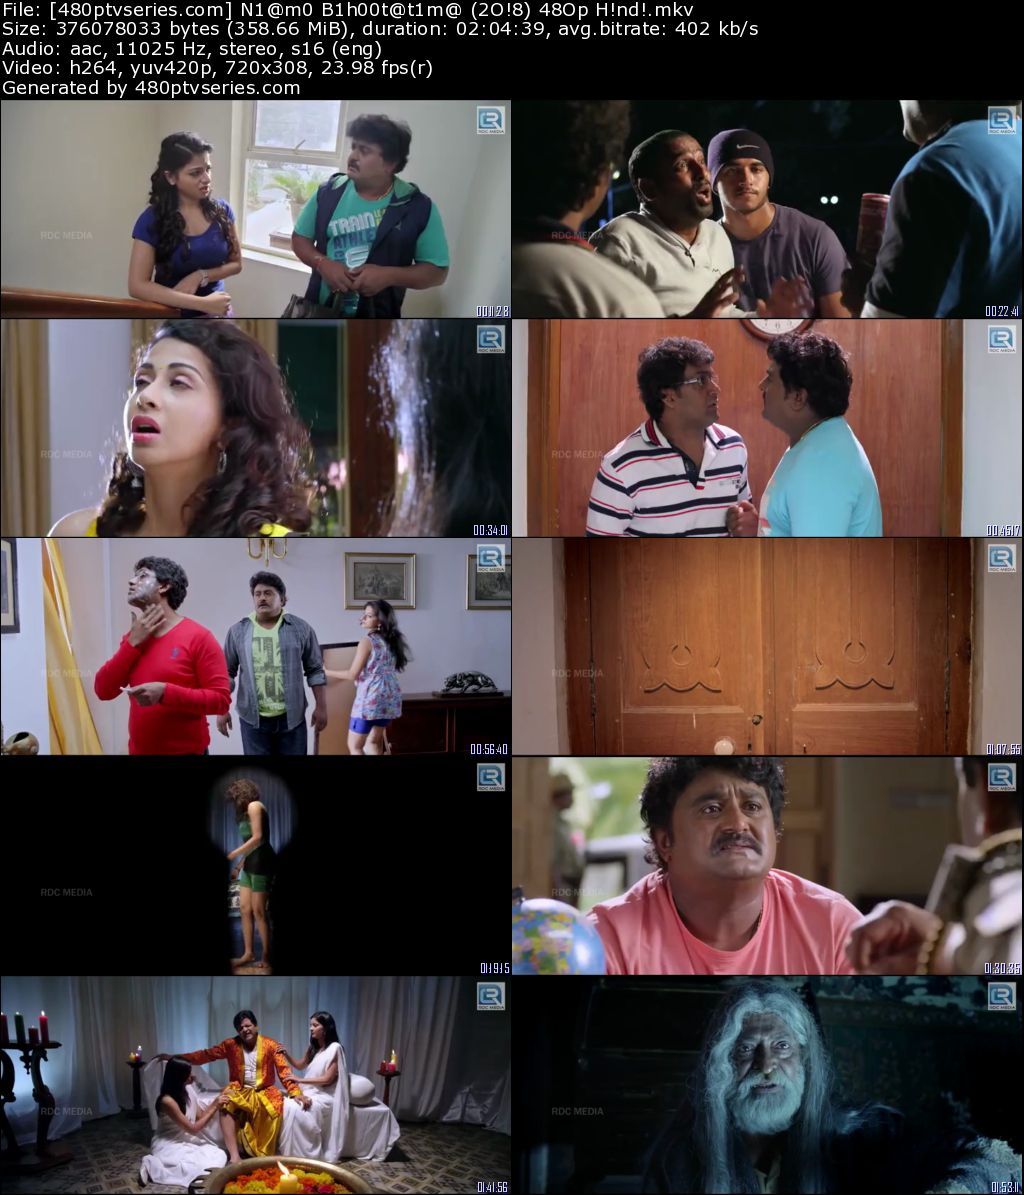 Namo Bhootatma (2018) 350MB Full Hindi Dubbed Movie Download 480p HDRip Free Watch Online Full Movie Download Worldfree4u 9xmovies